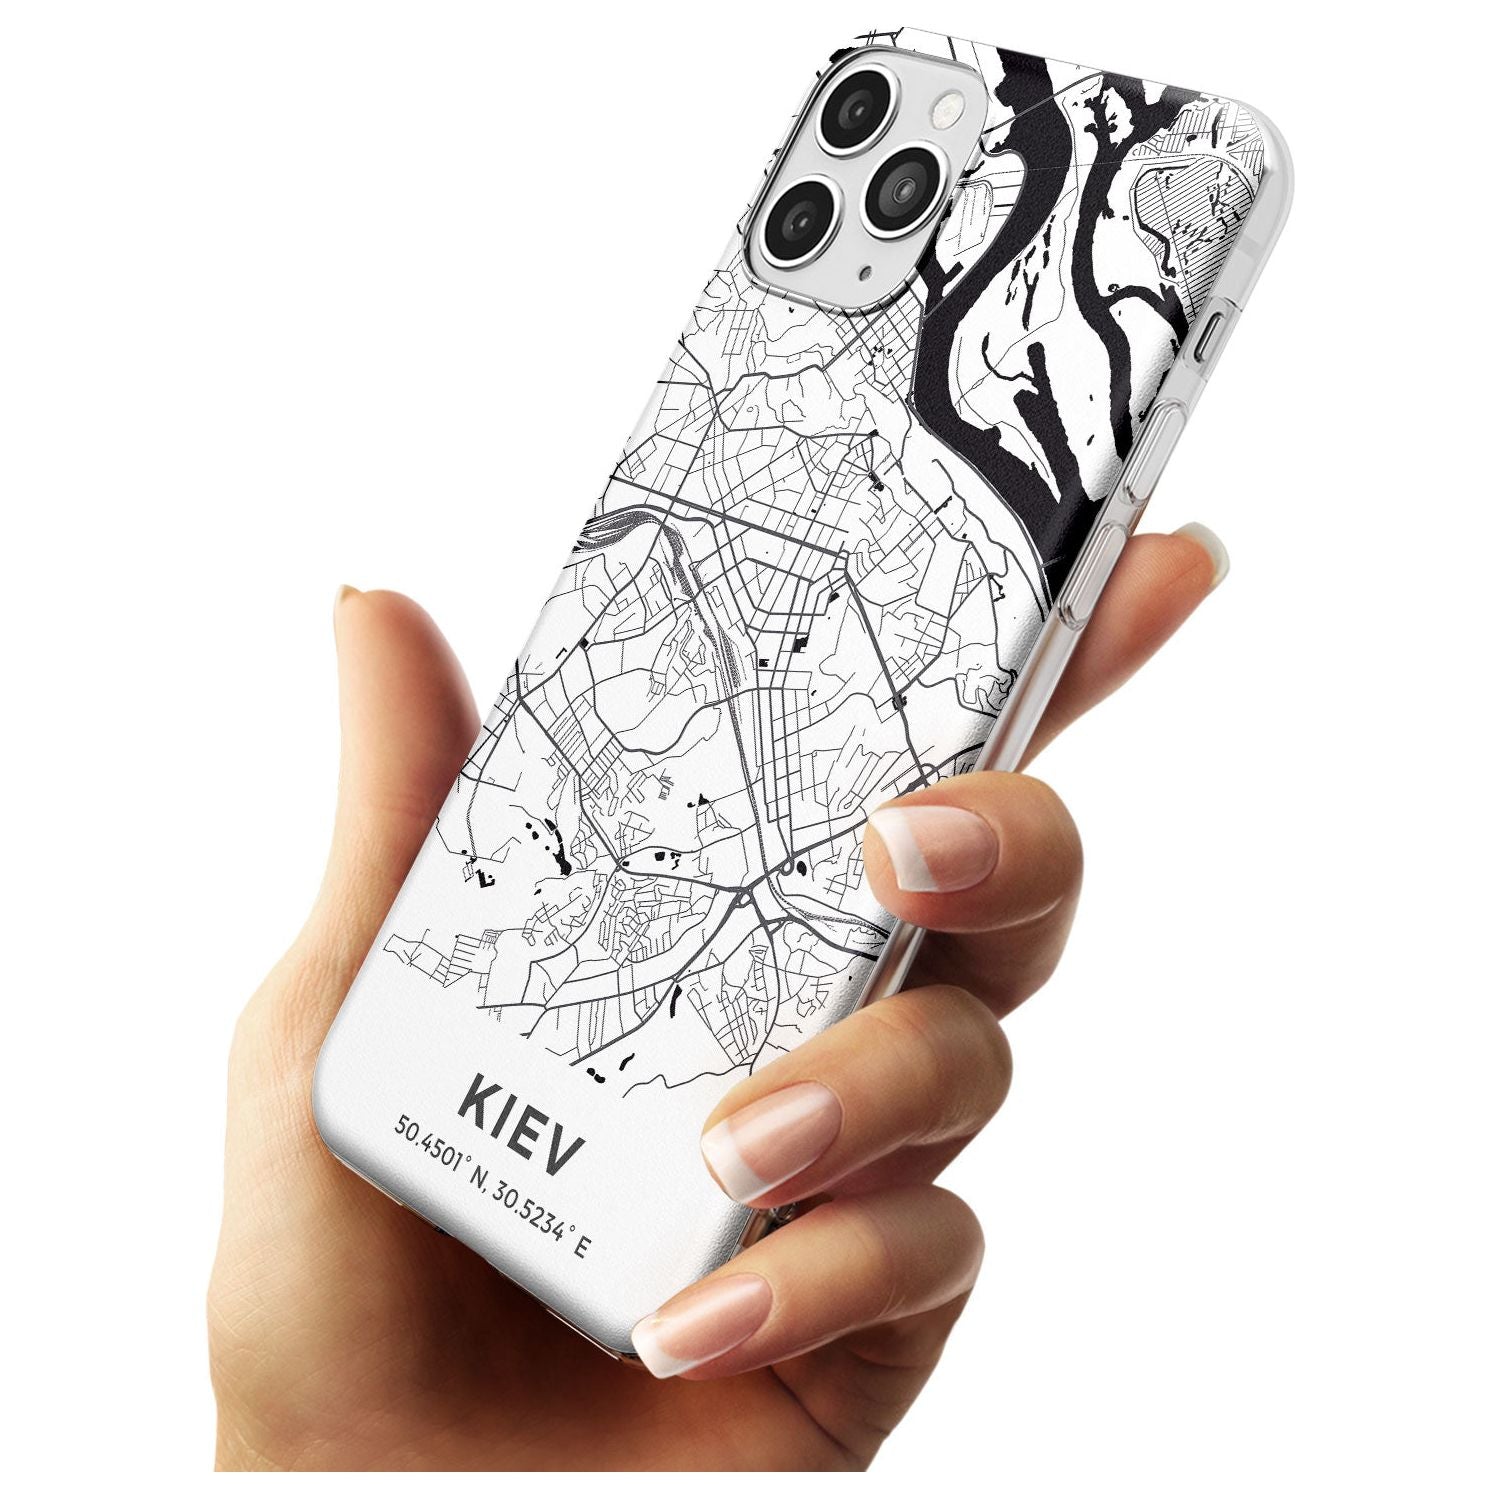 Map of Kiev, Ukraine Slim TPU Phone Case for iPhone 11 Pro Max